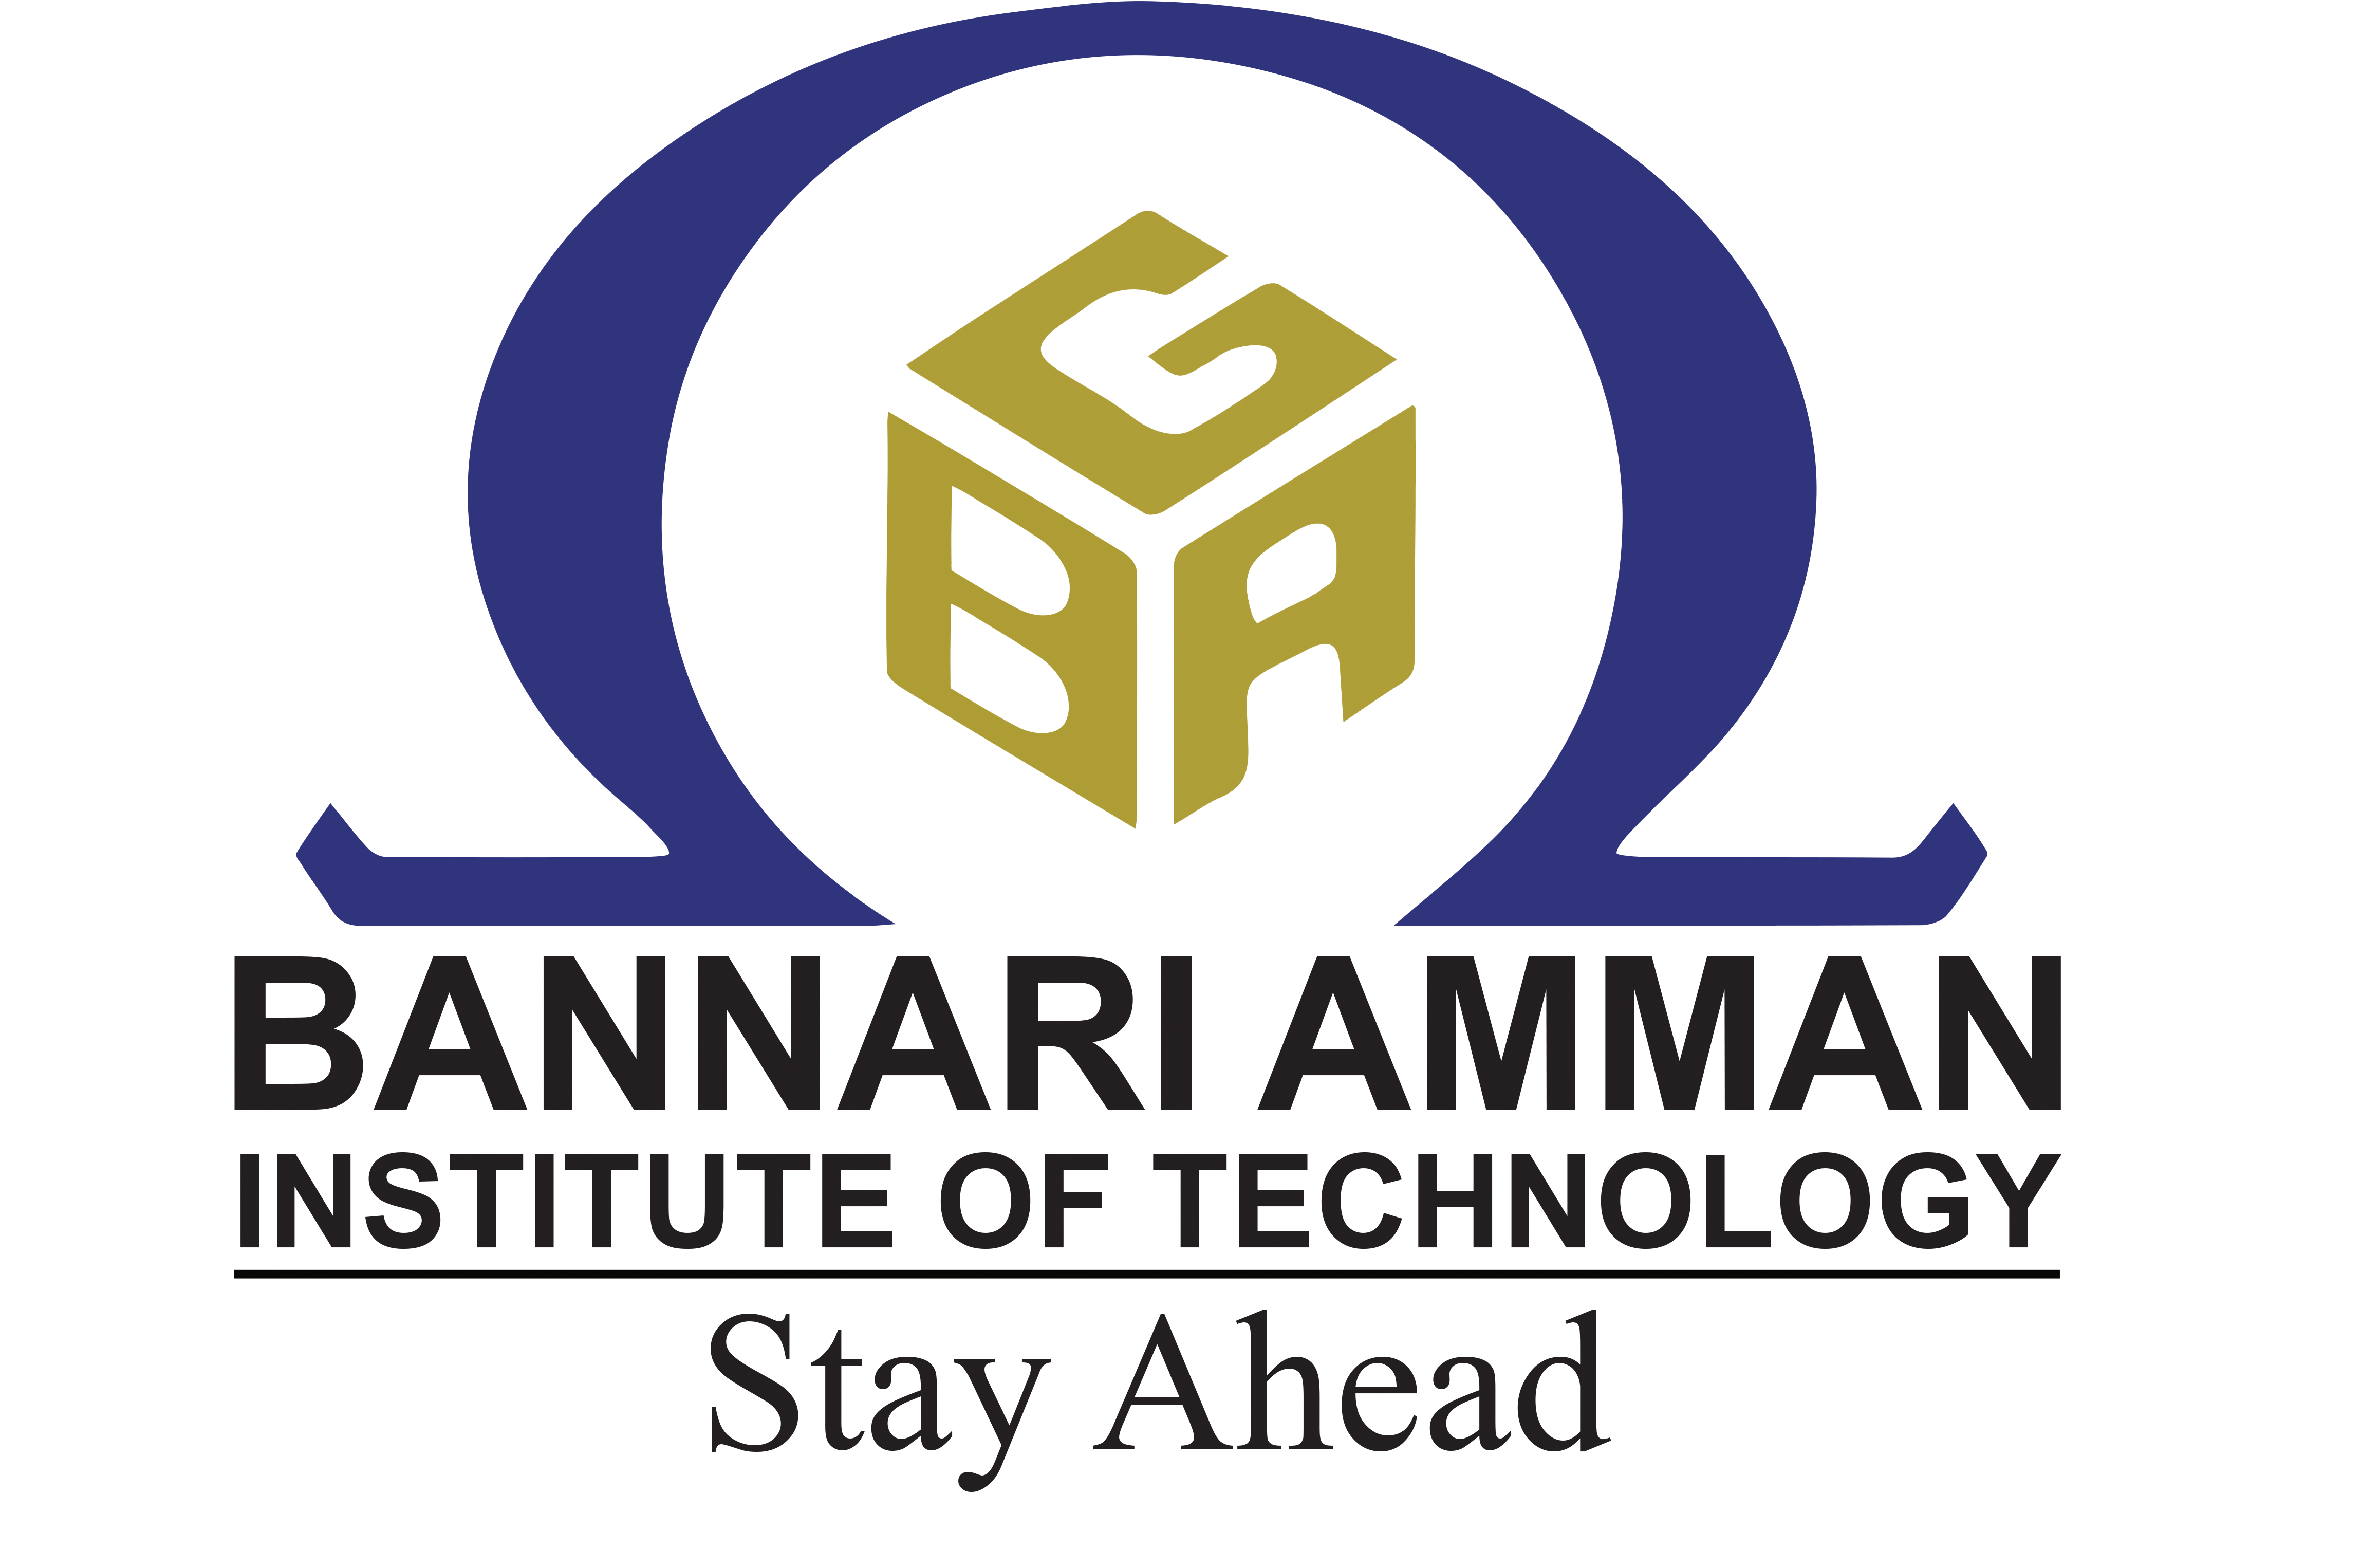 BANNARI AMMAN INSTITUTE OF TECHNOLOGY